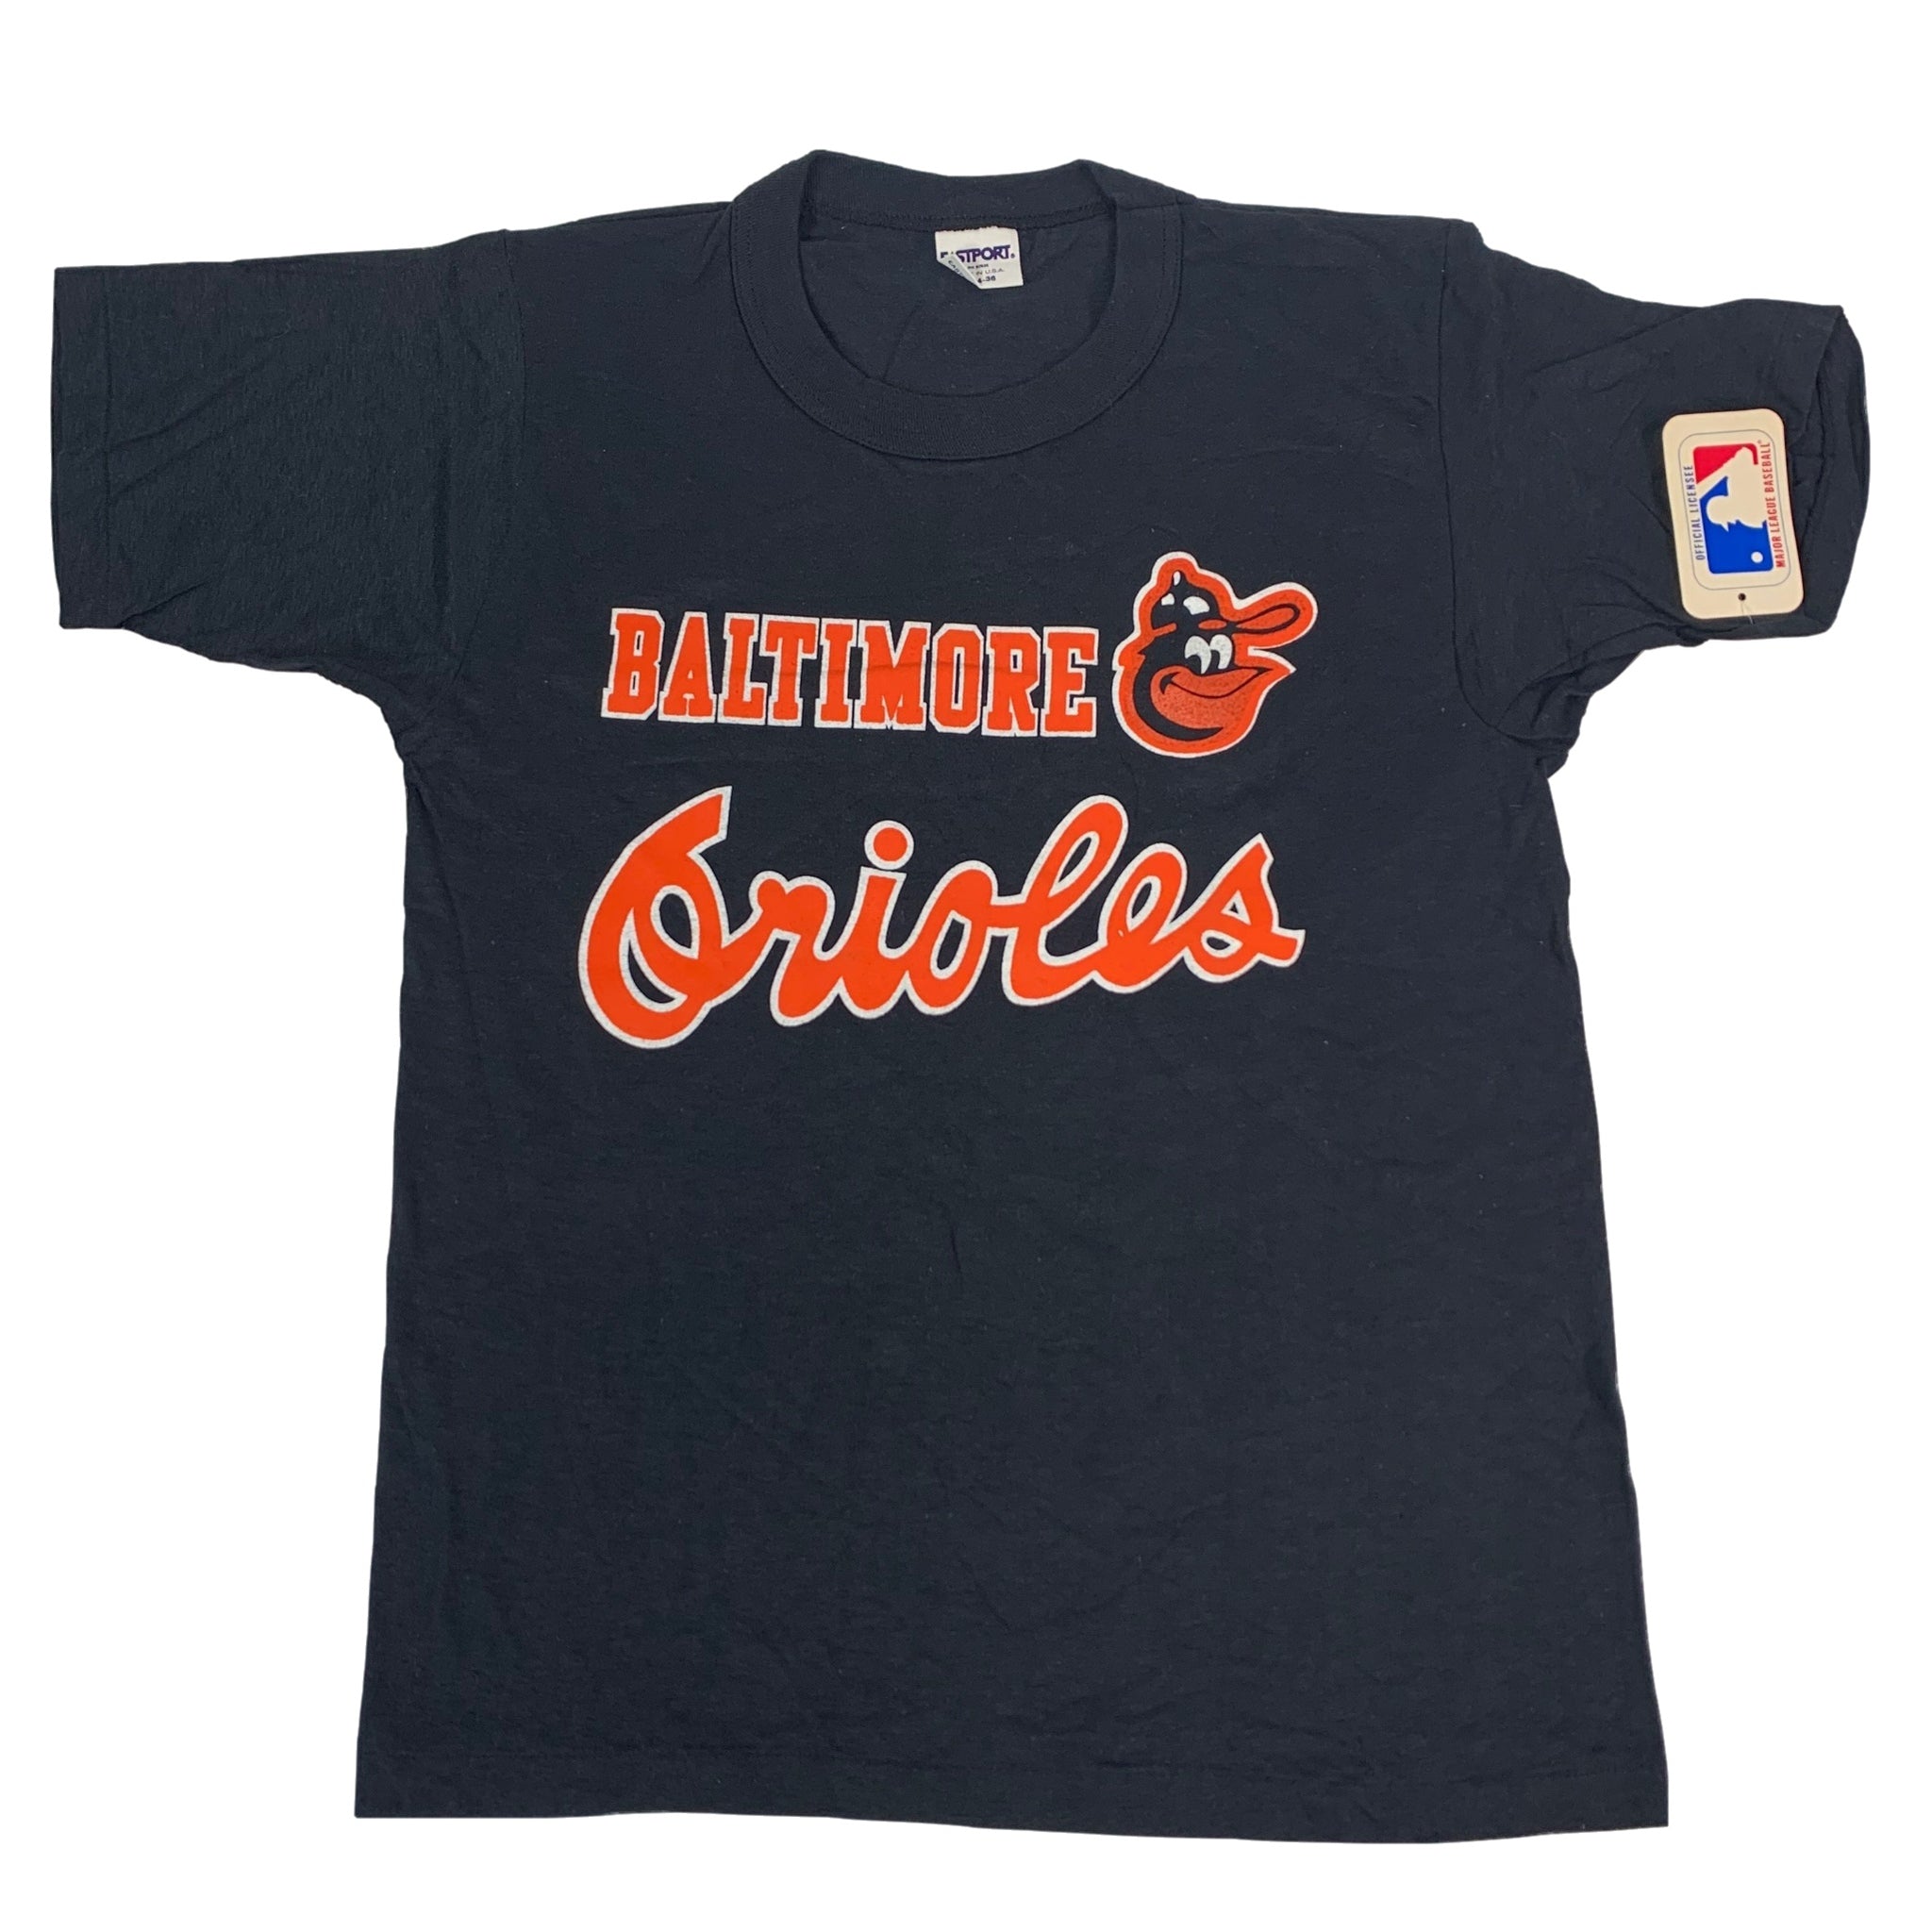 Vintage Mlb/baltimore Orioles CAL RIPKEN Tee Shirt Size 